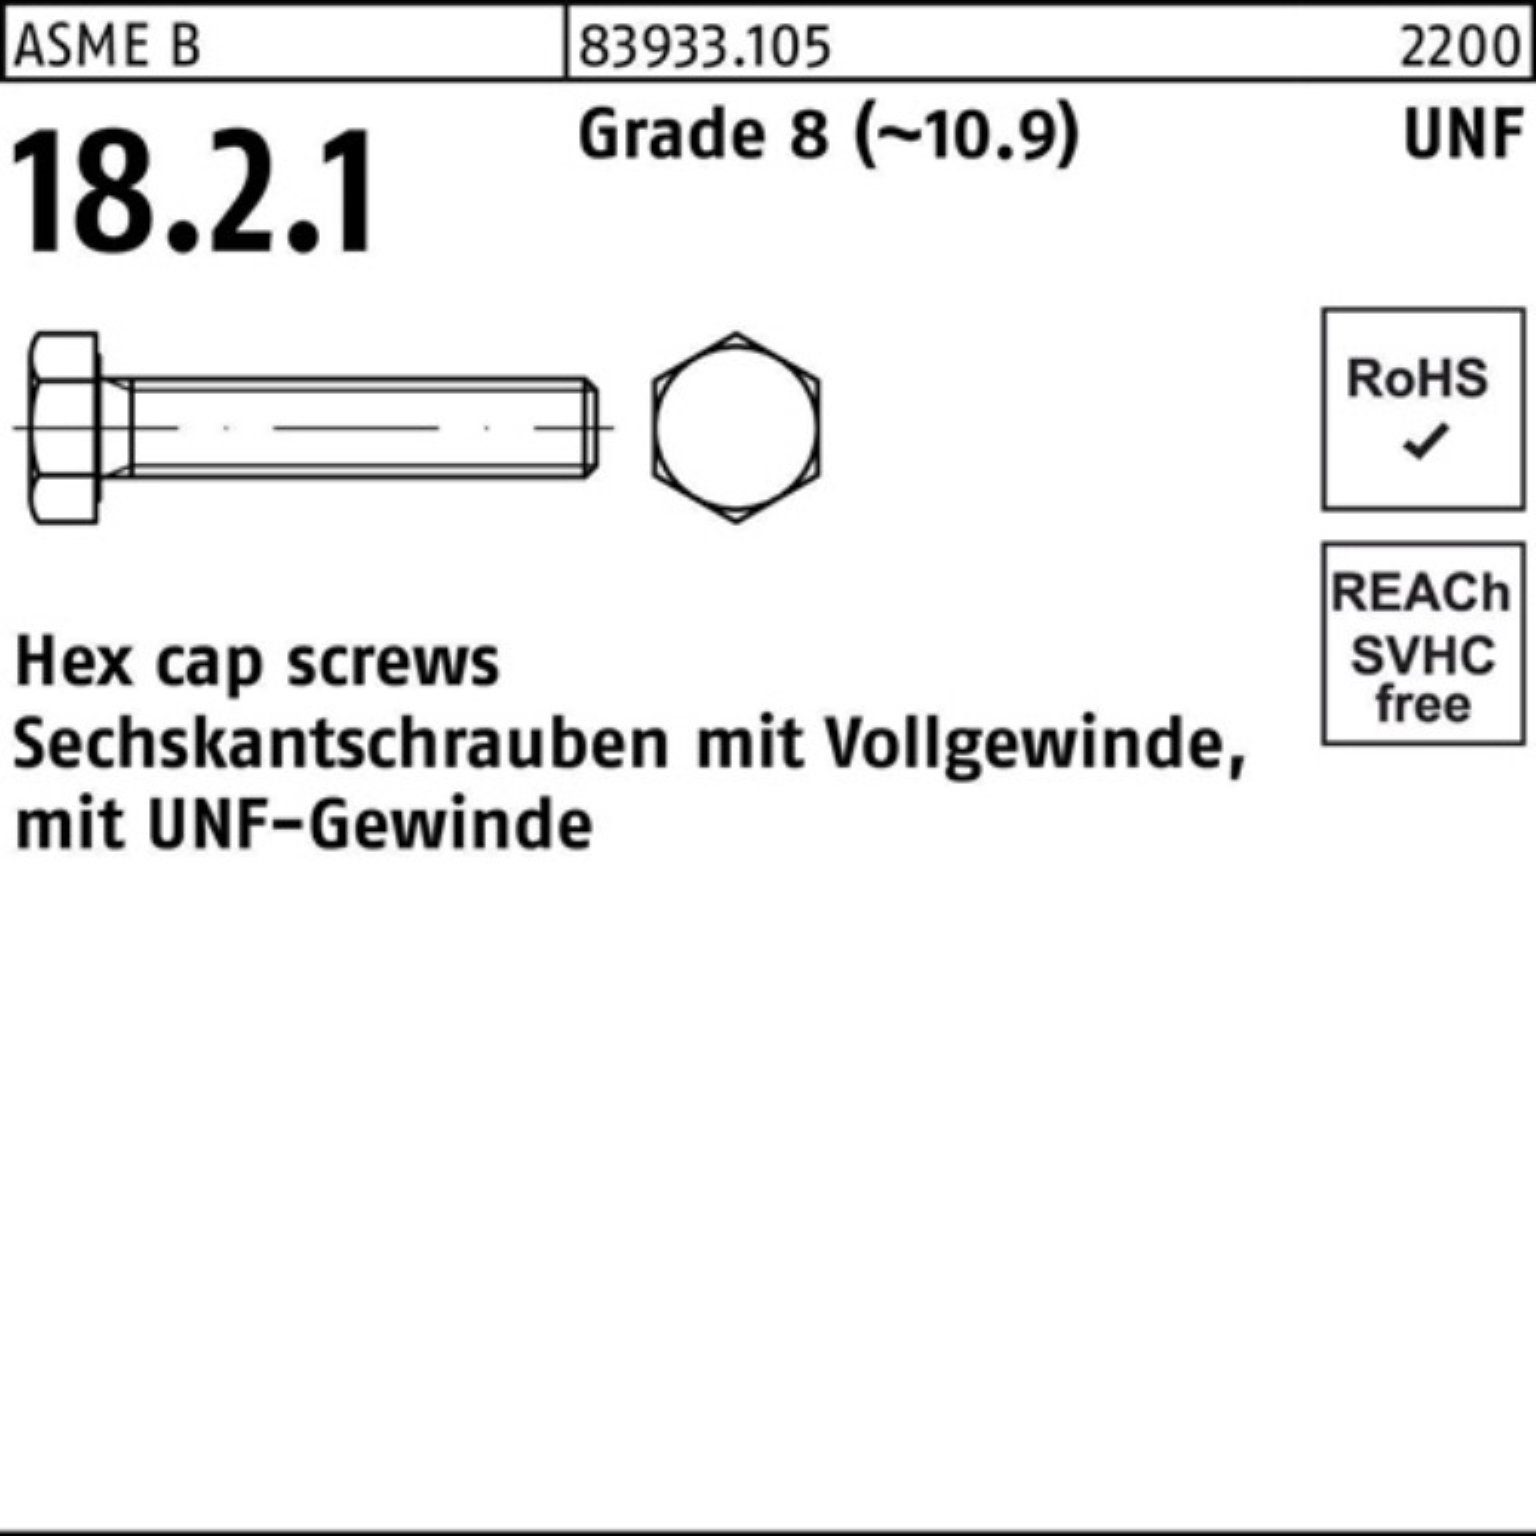 Reyher Sechskantschraube 100er Pack Sechskantschraube R 83933 UNF-Gewinde VG 3/8x 1/2 Grade 8